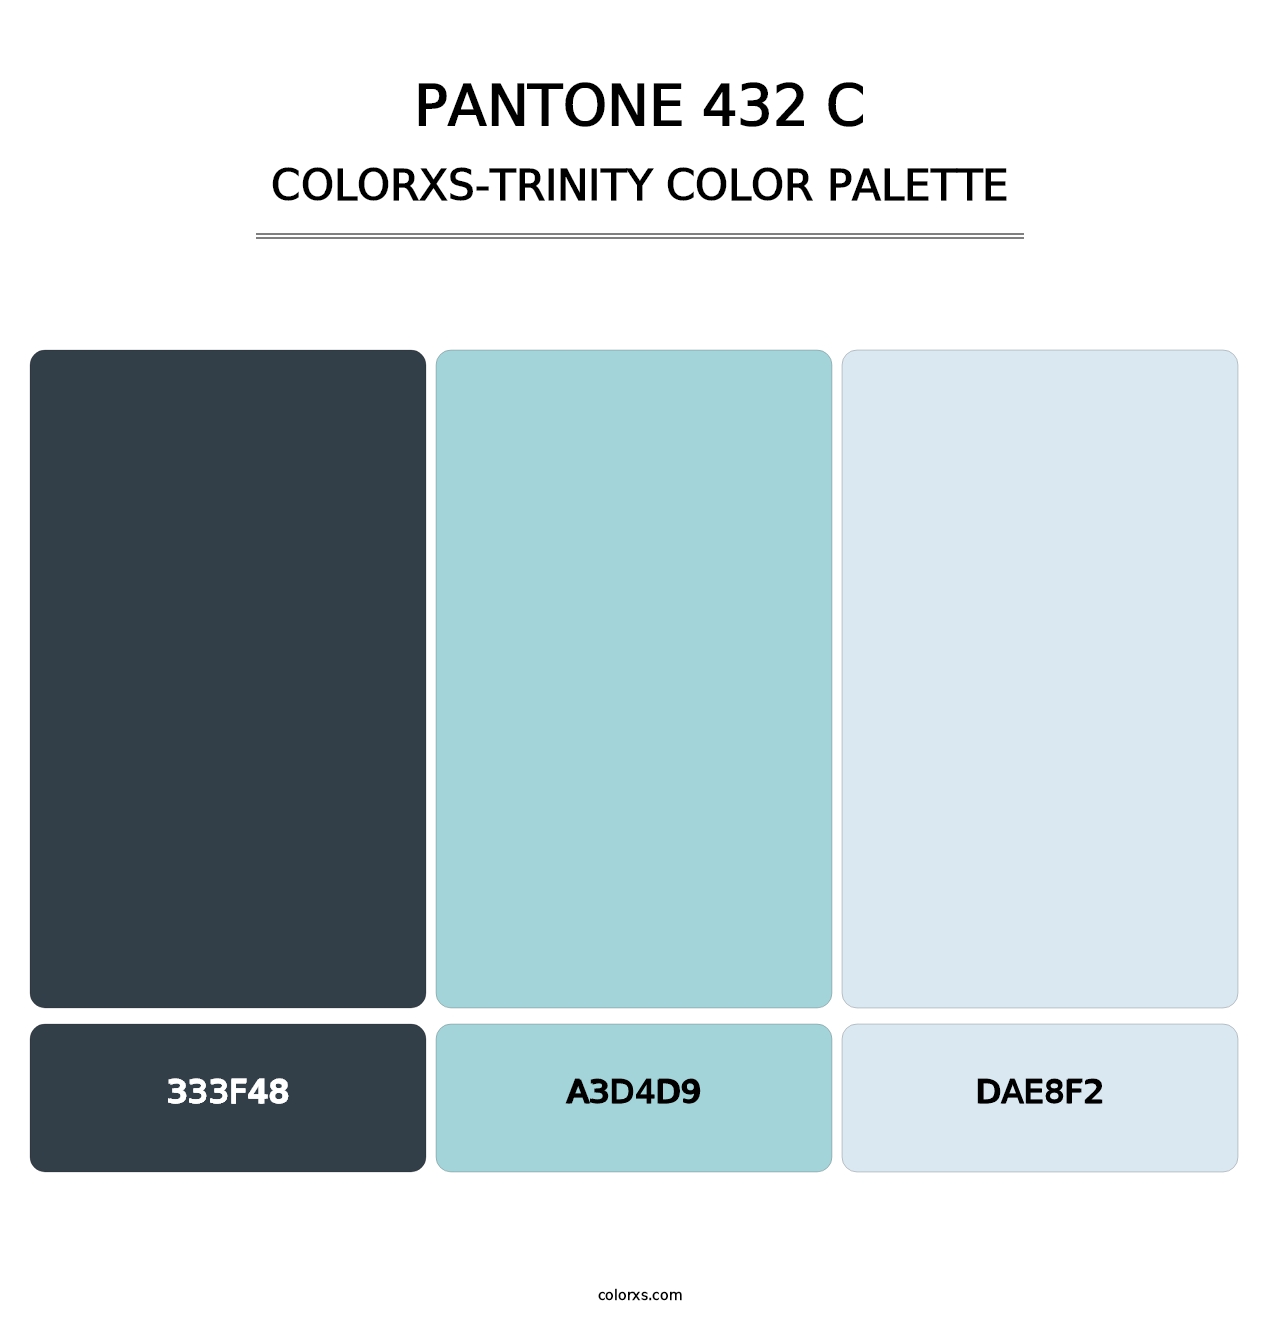 PANTONE 432 C - Colorxs Trinity Palette